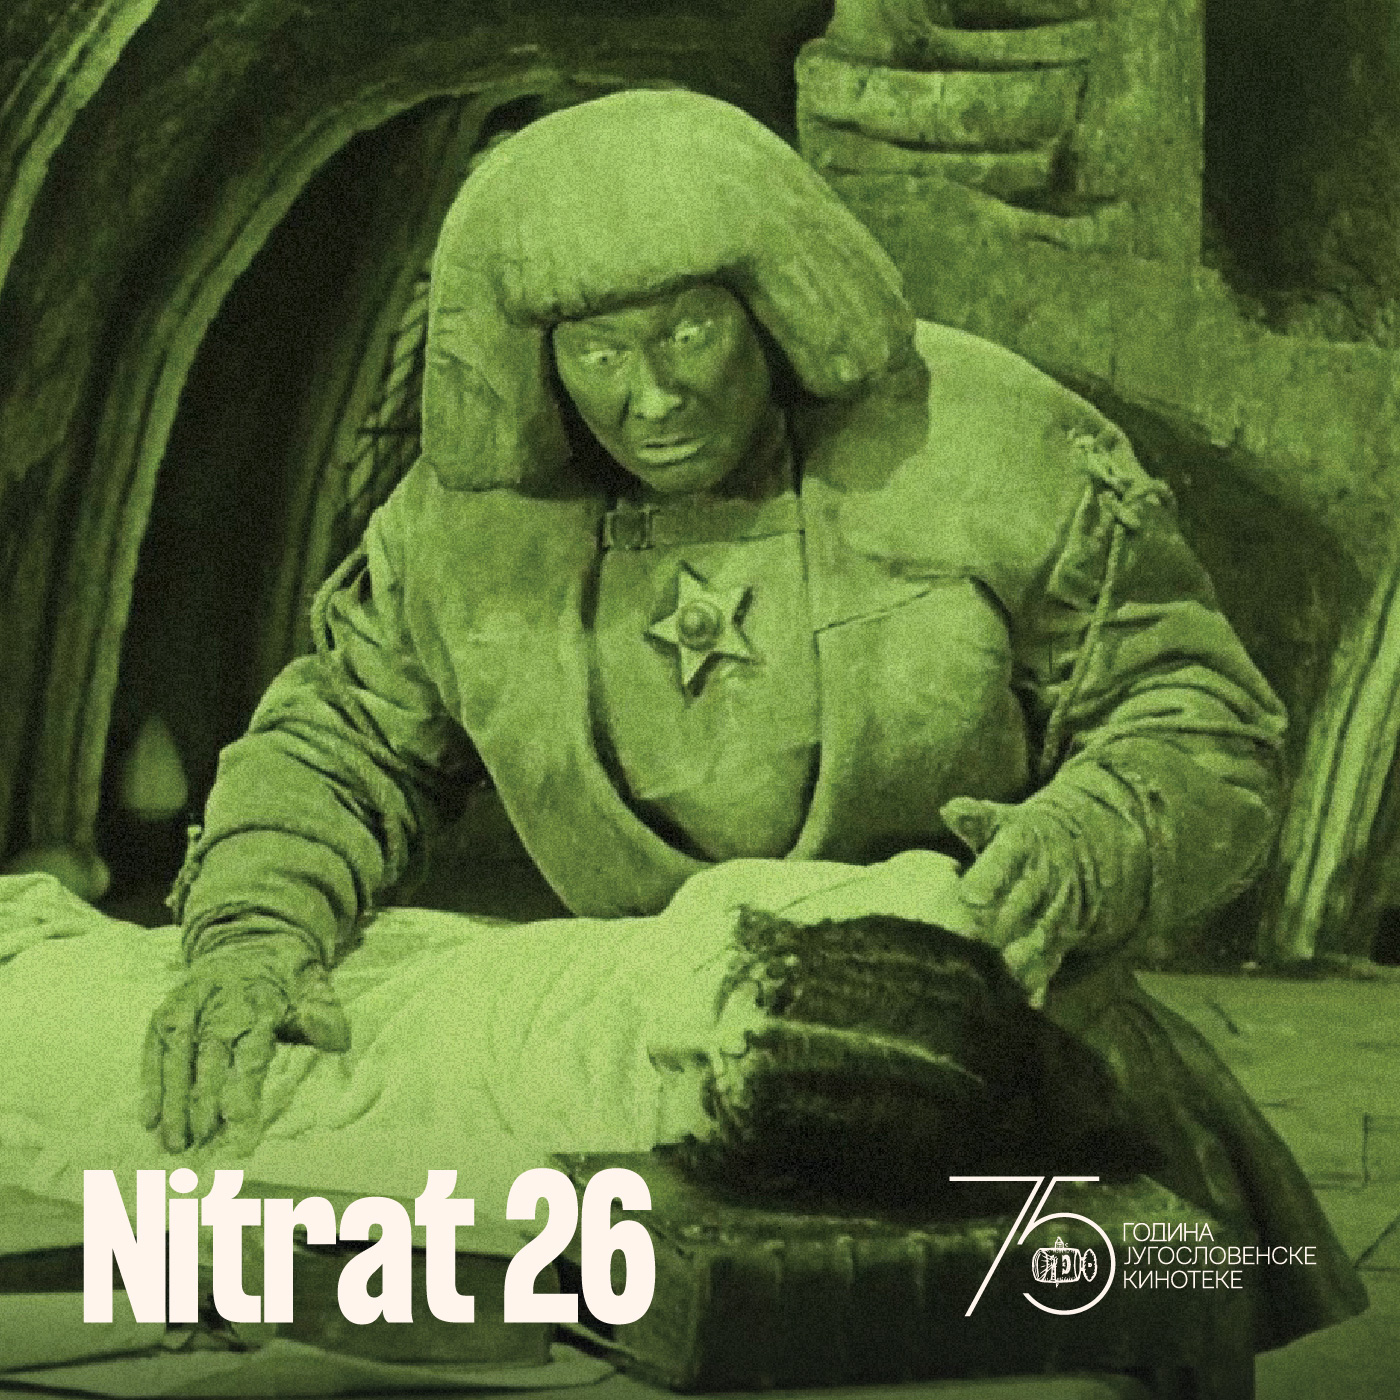 NITRAT 26, najava programa, web ig post-05